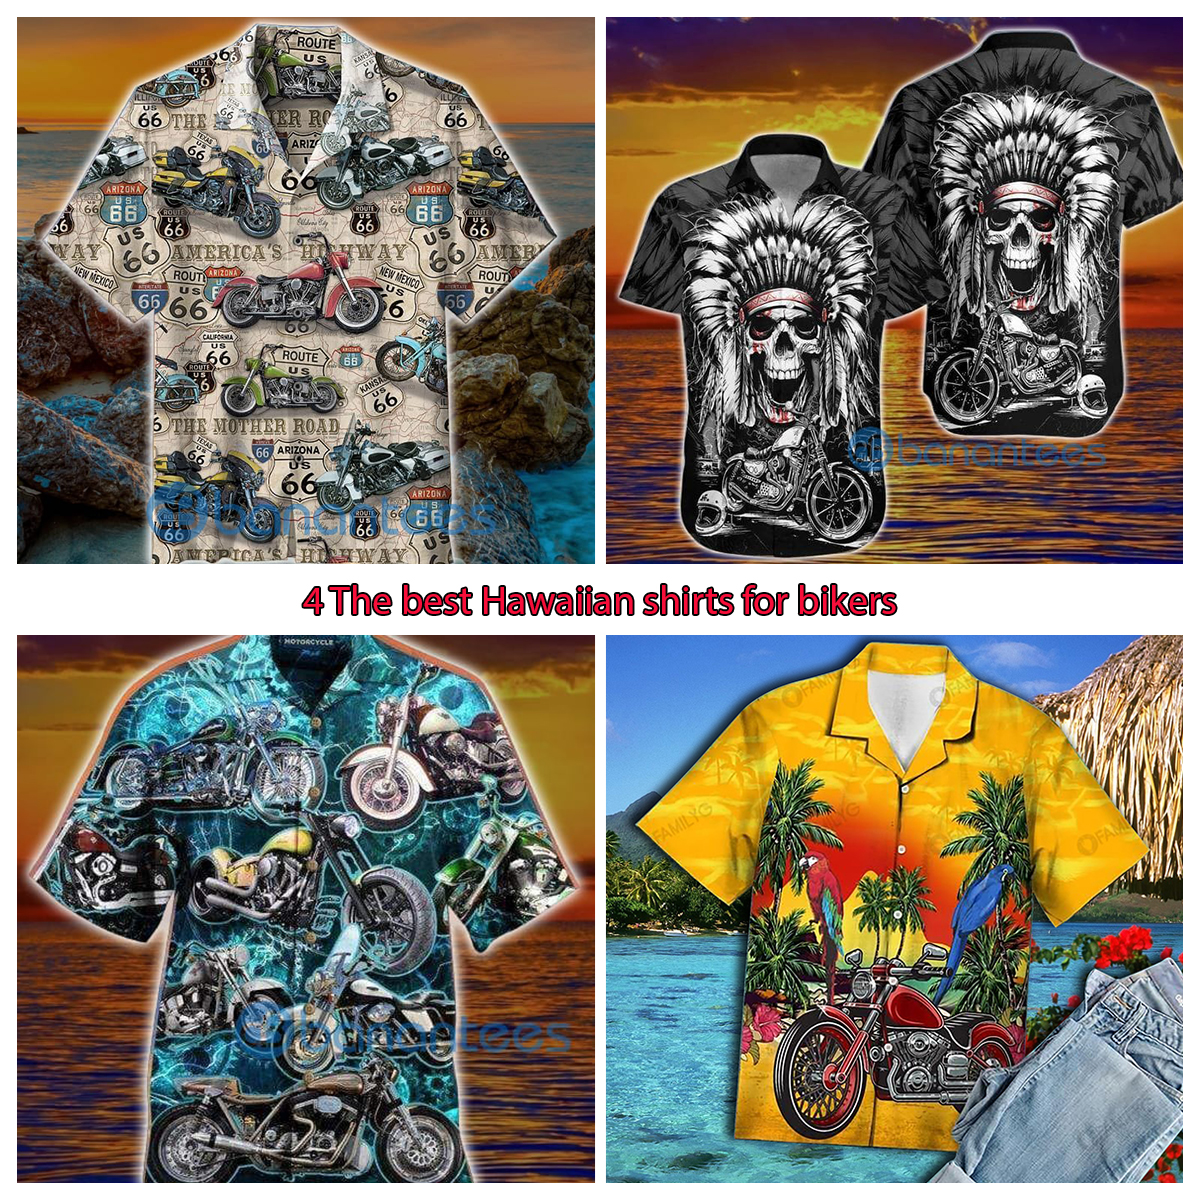 The best Hawaiian shirts for bikers